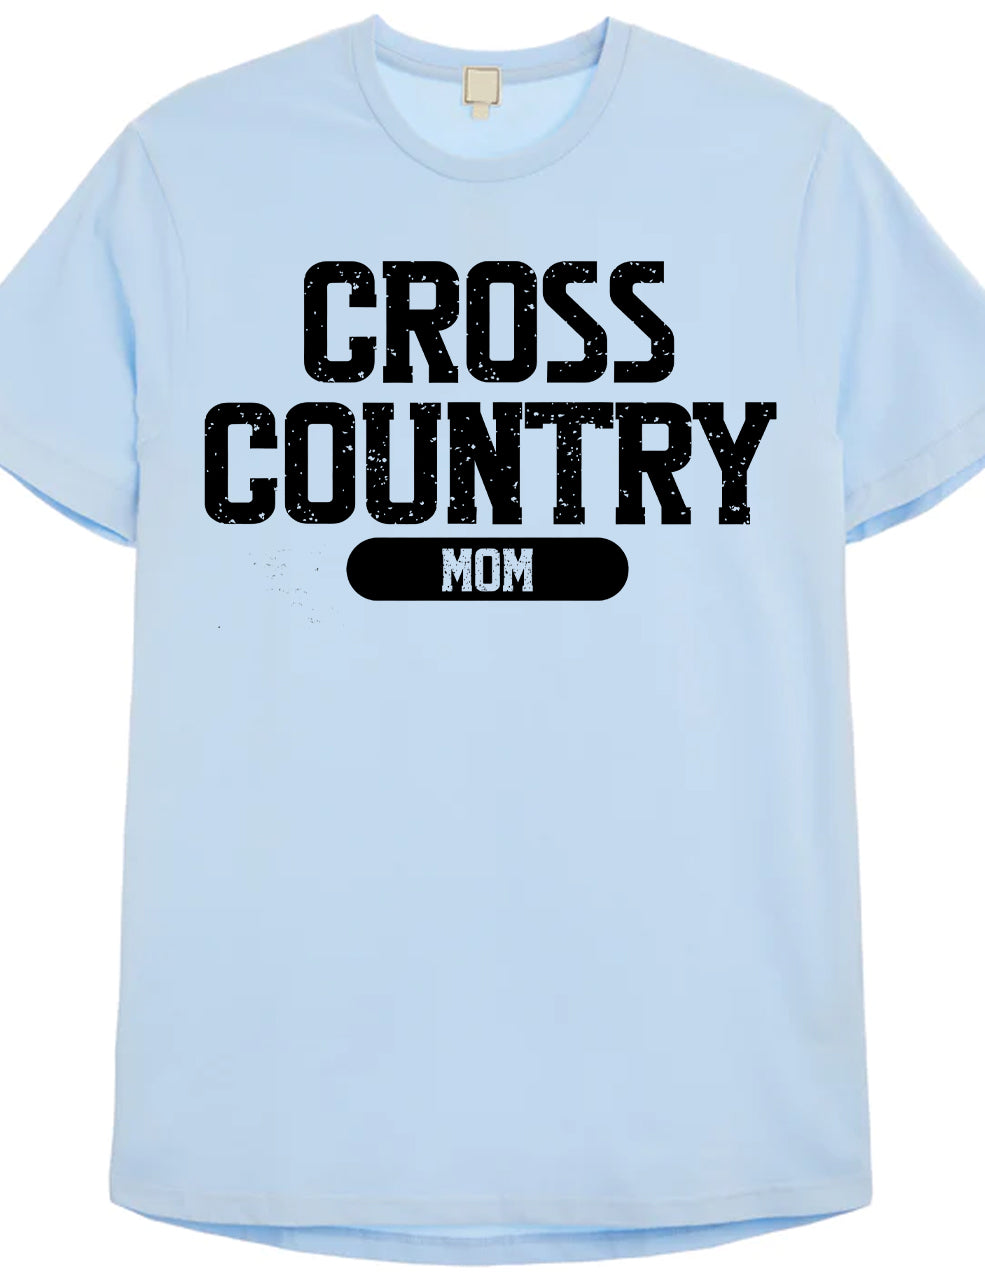 Cross Country Mom T-shirt